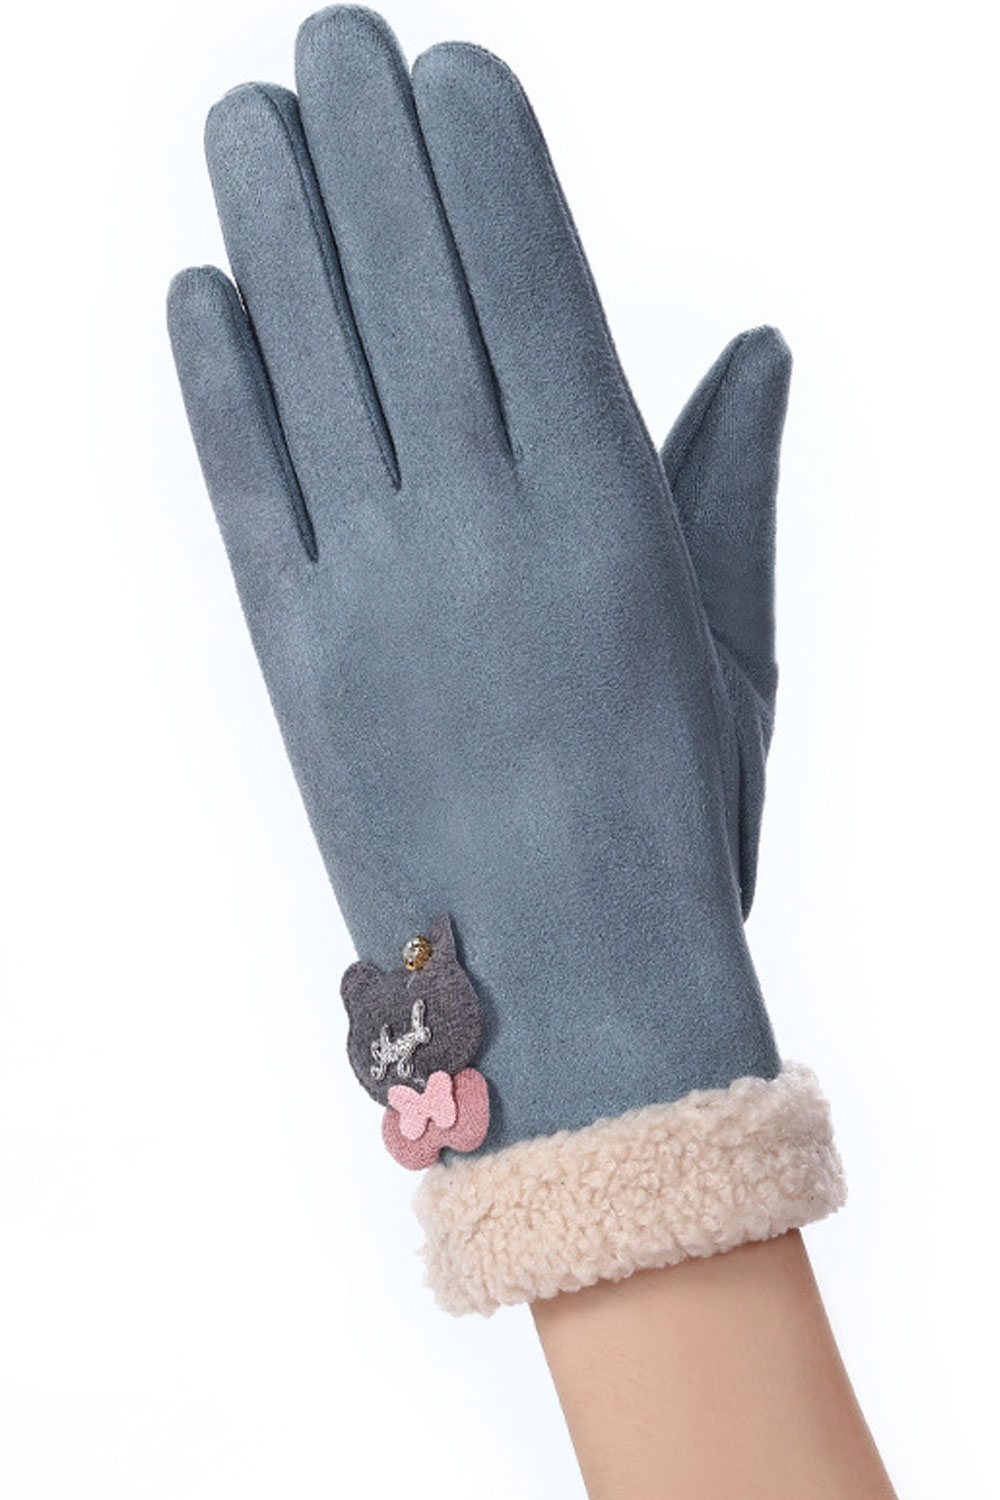 Zumeet Women Casual Thick Warm Winter Gloves